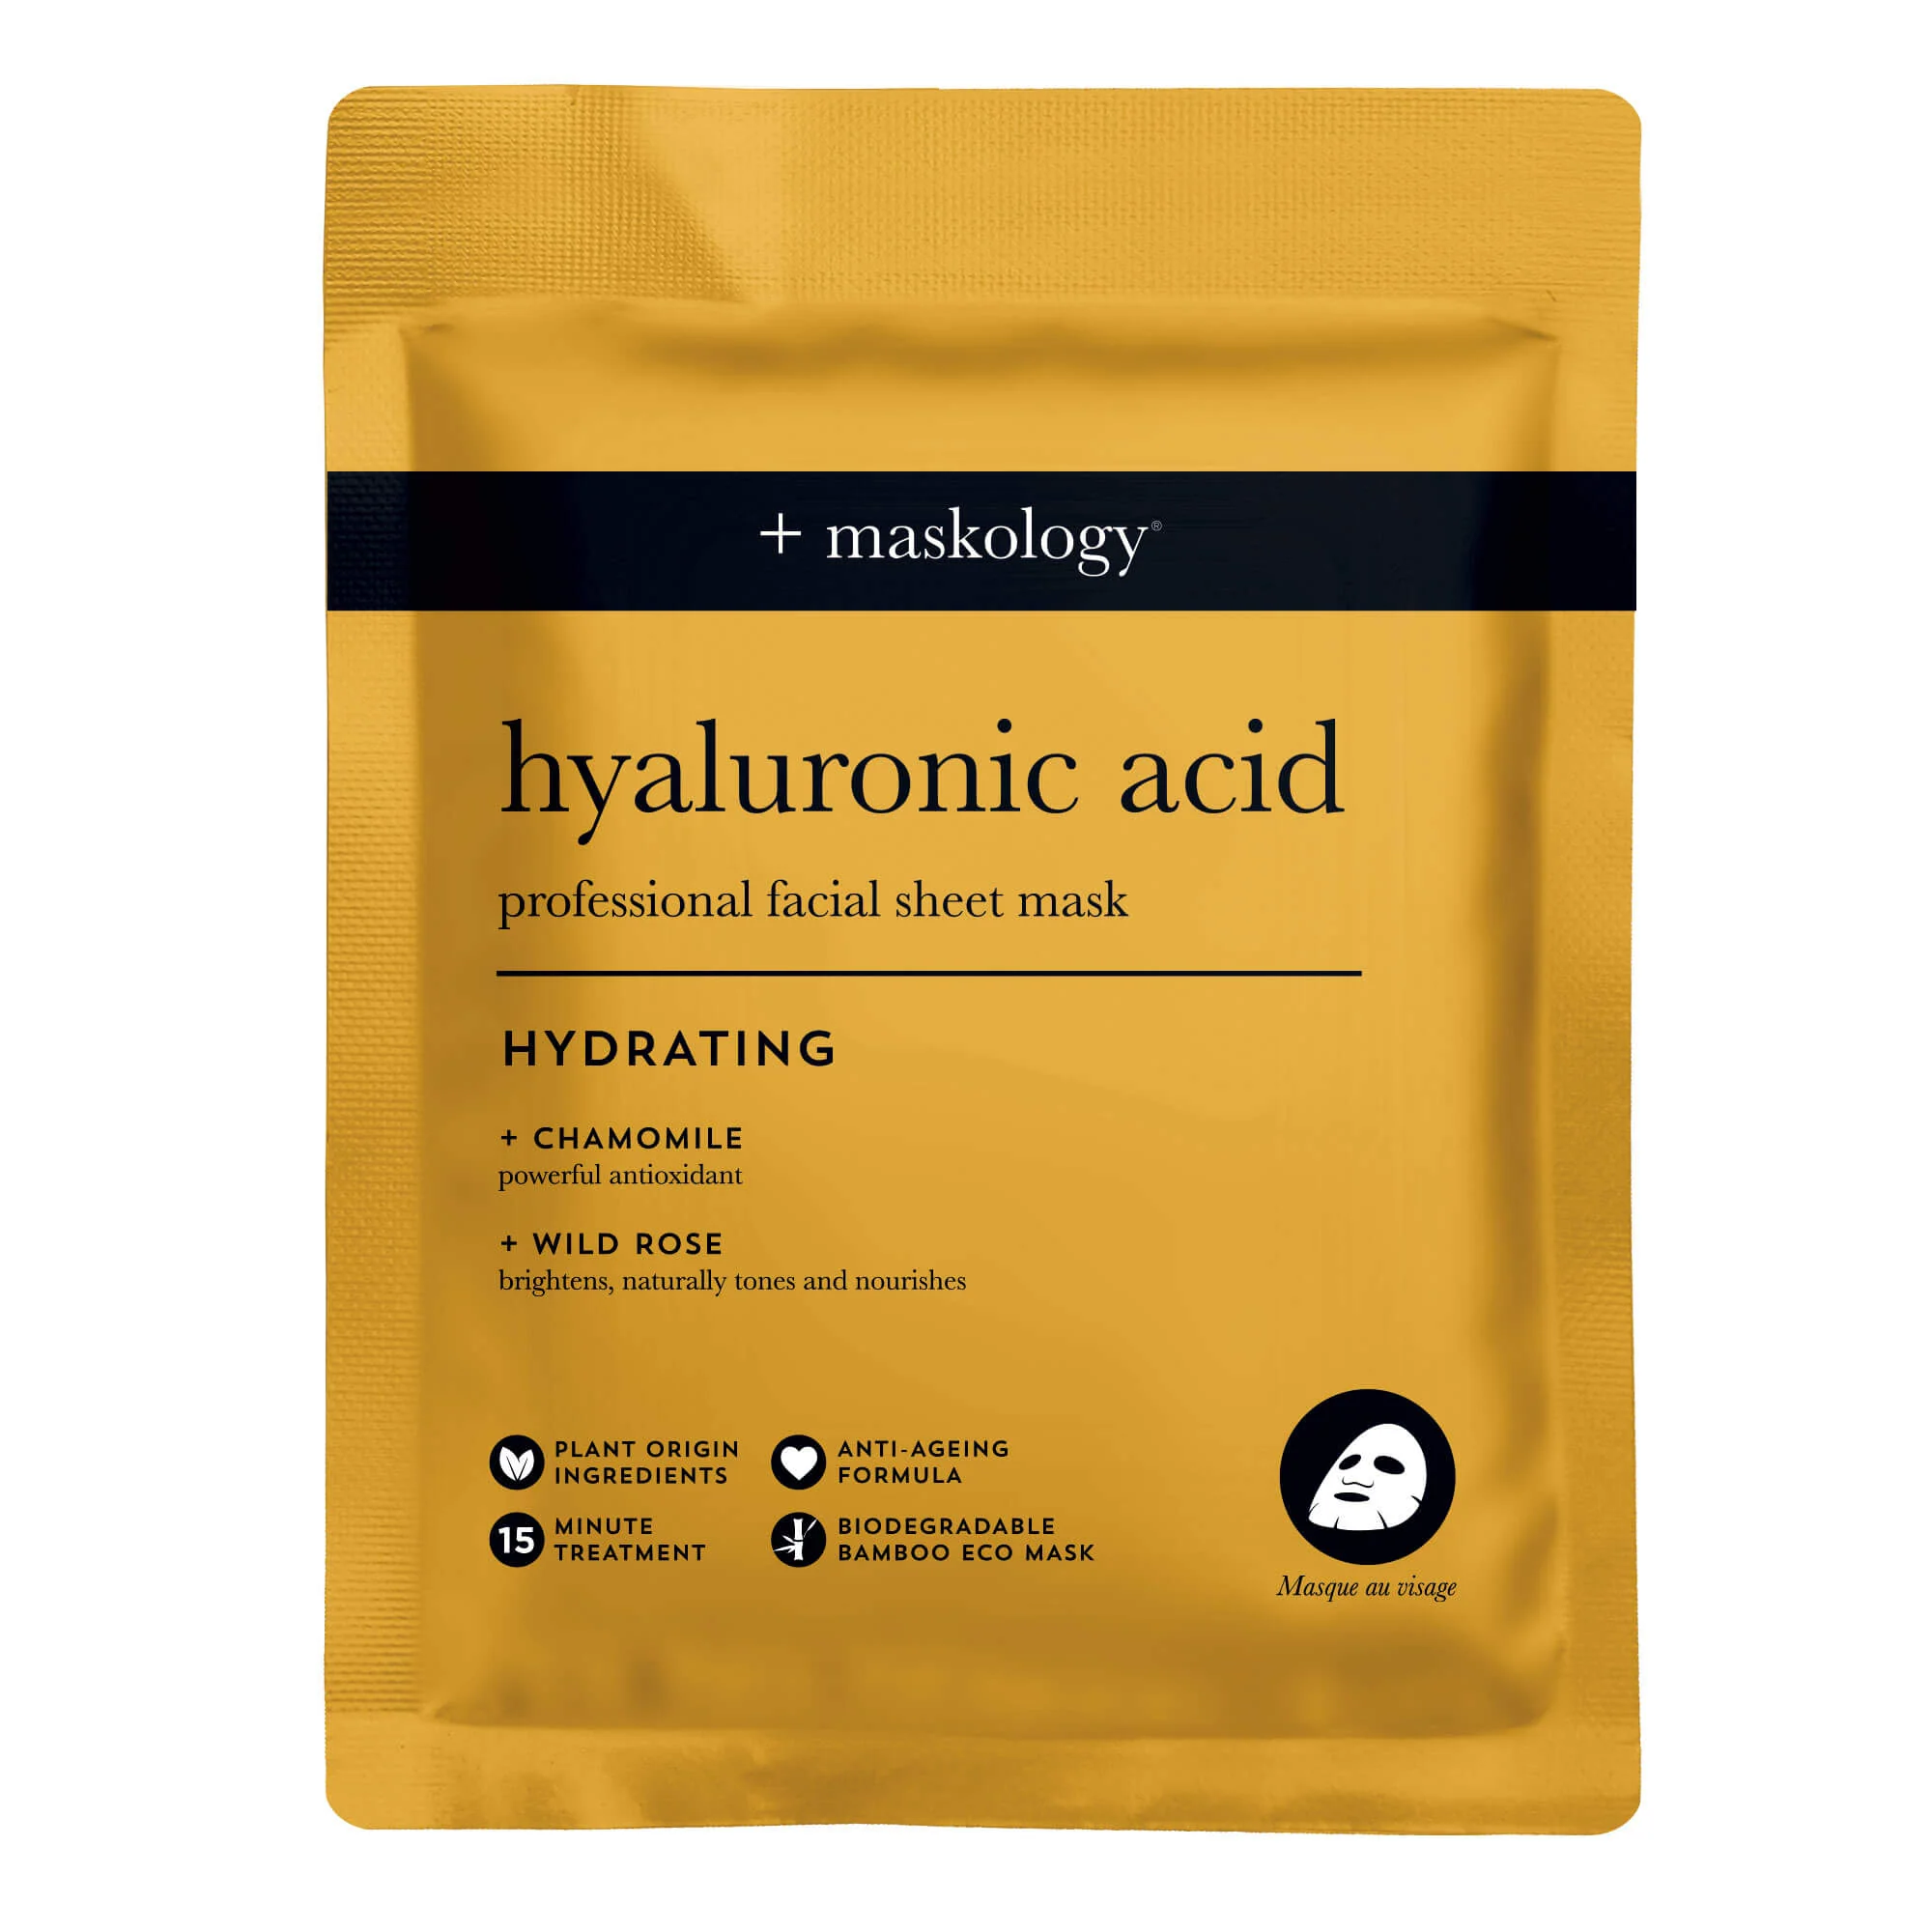 Maskology Hyaluronic Acid Professional Facial Sheet Mask